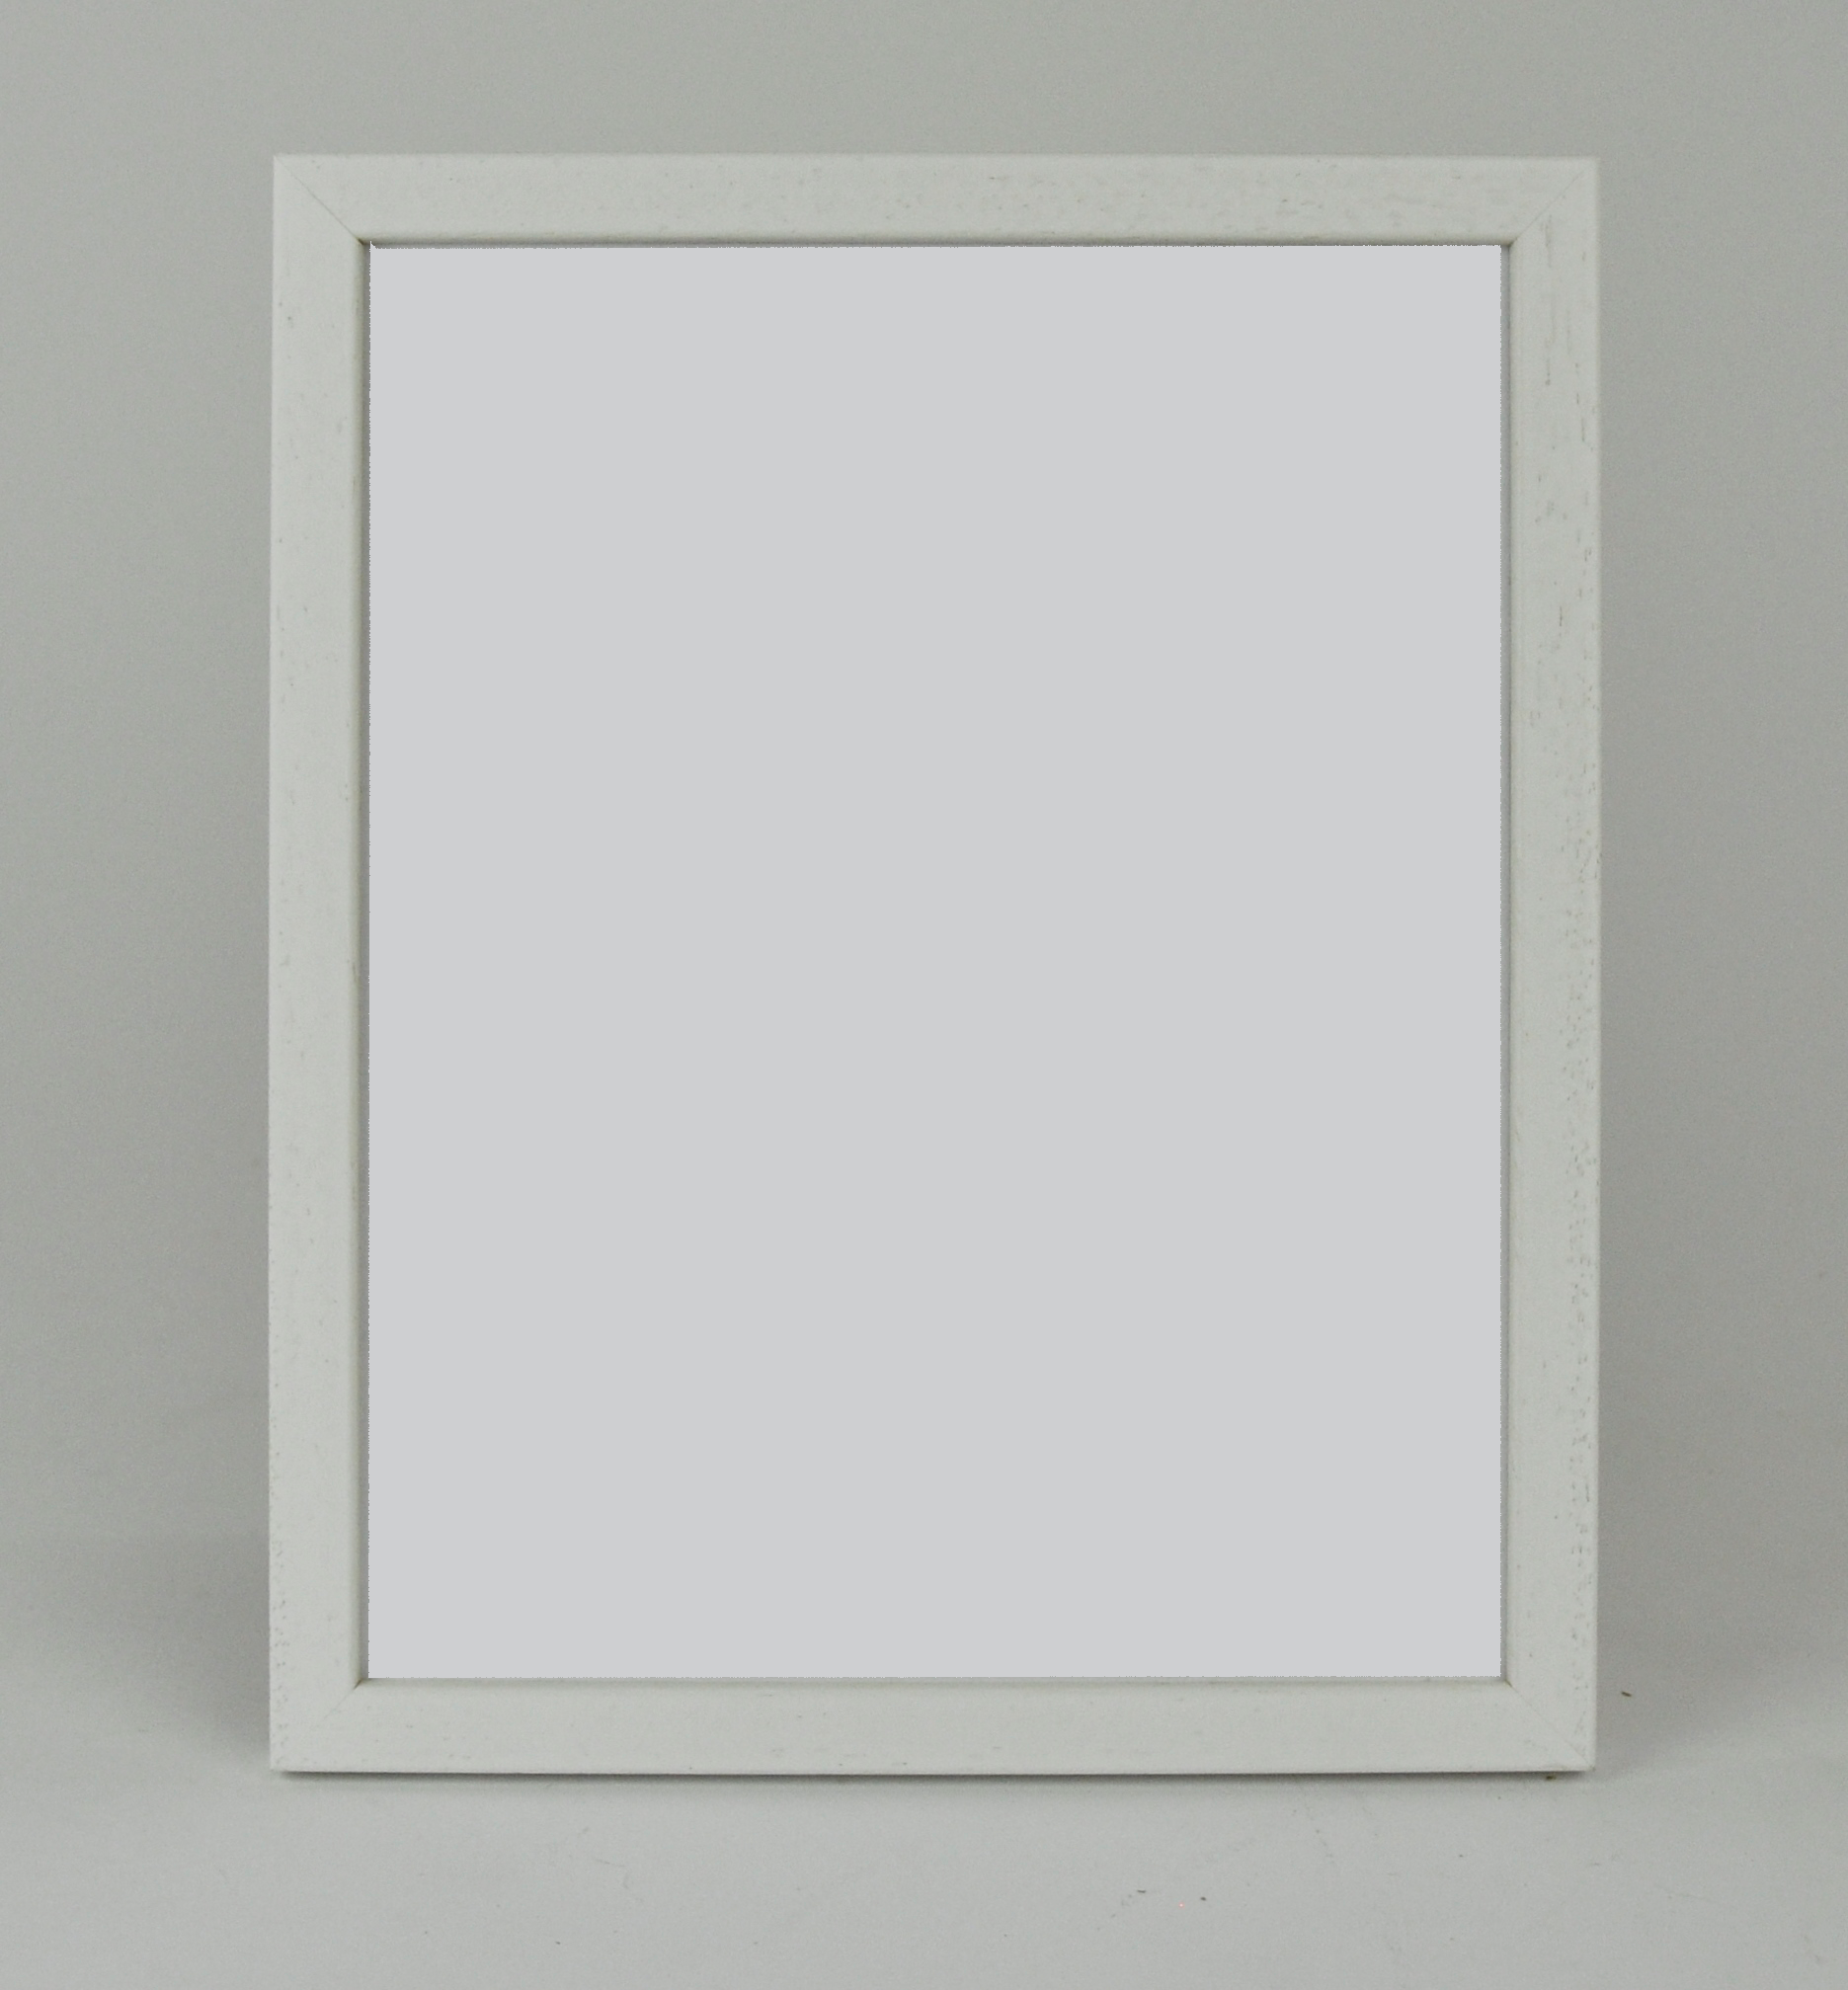 A4 White Frame